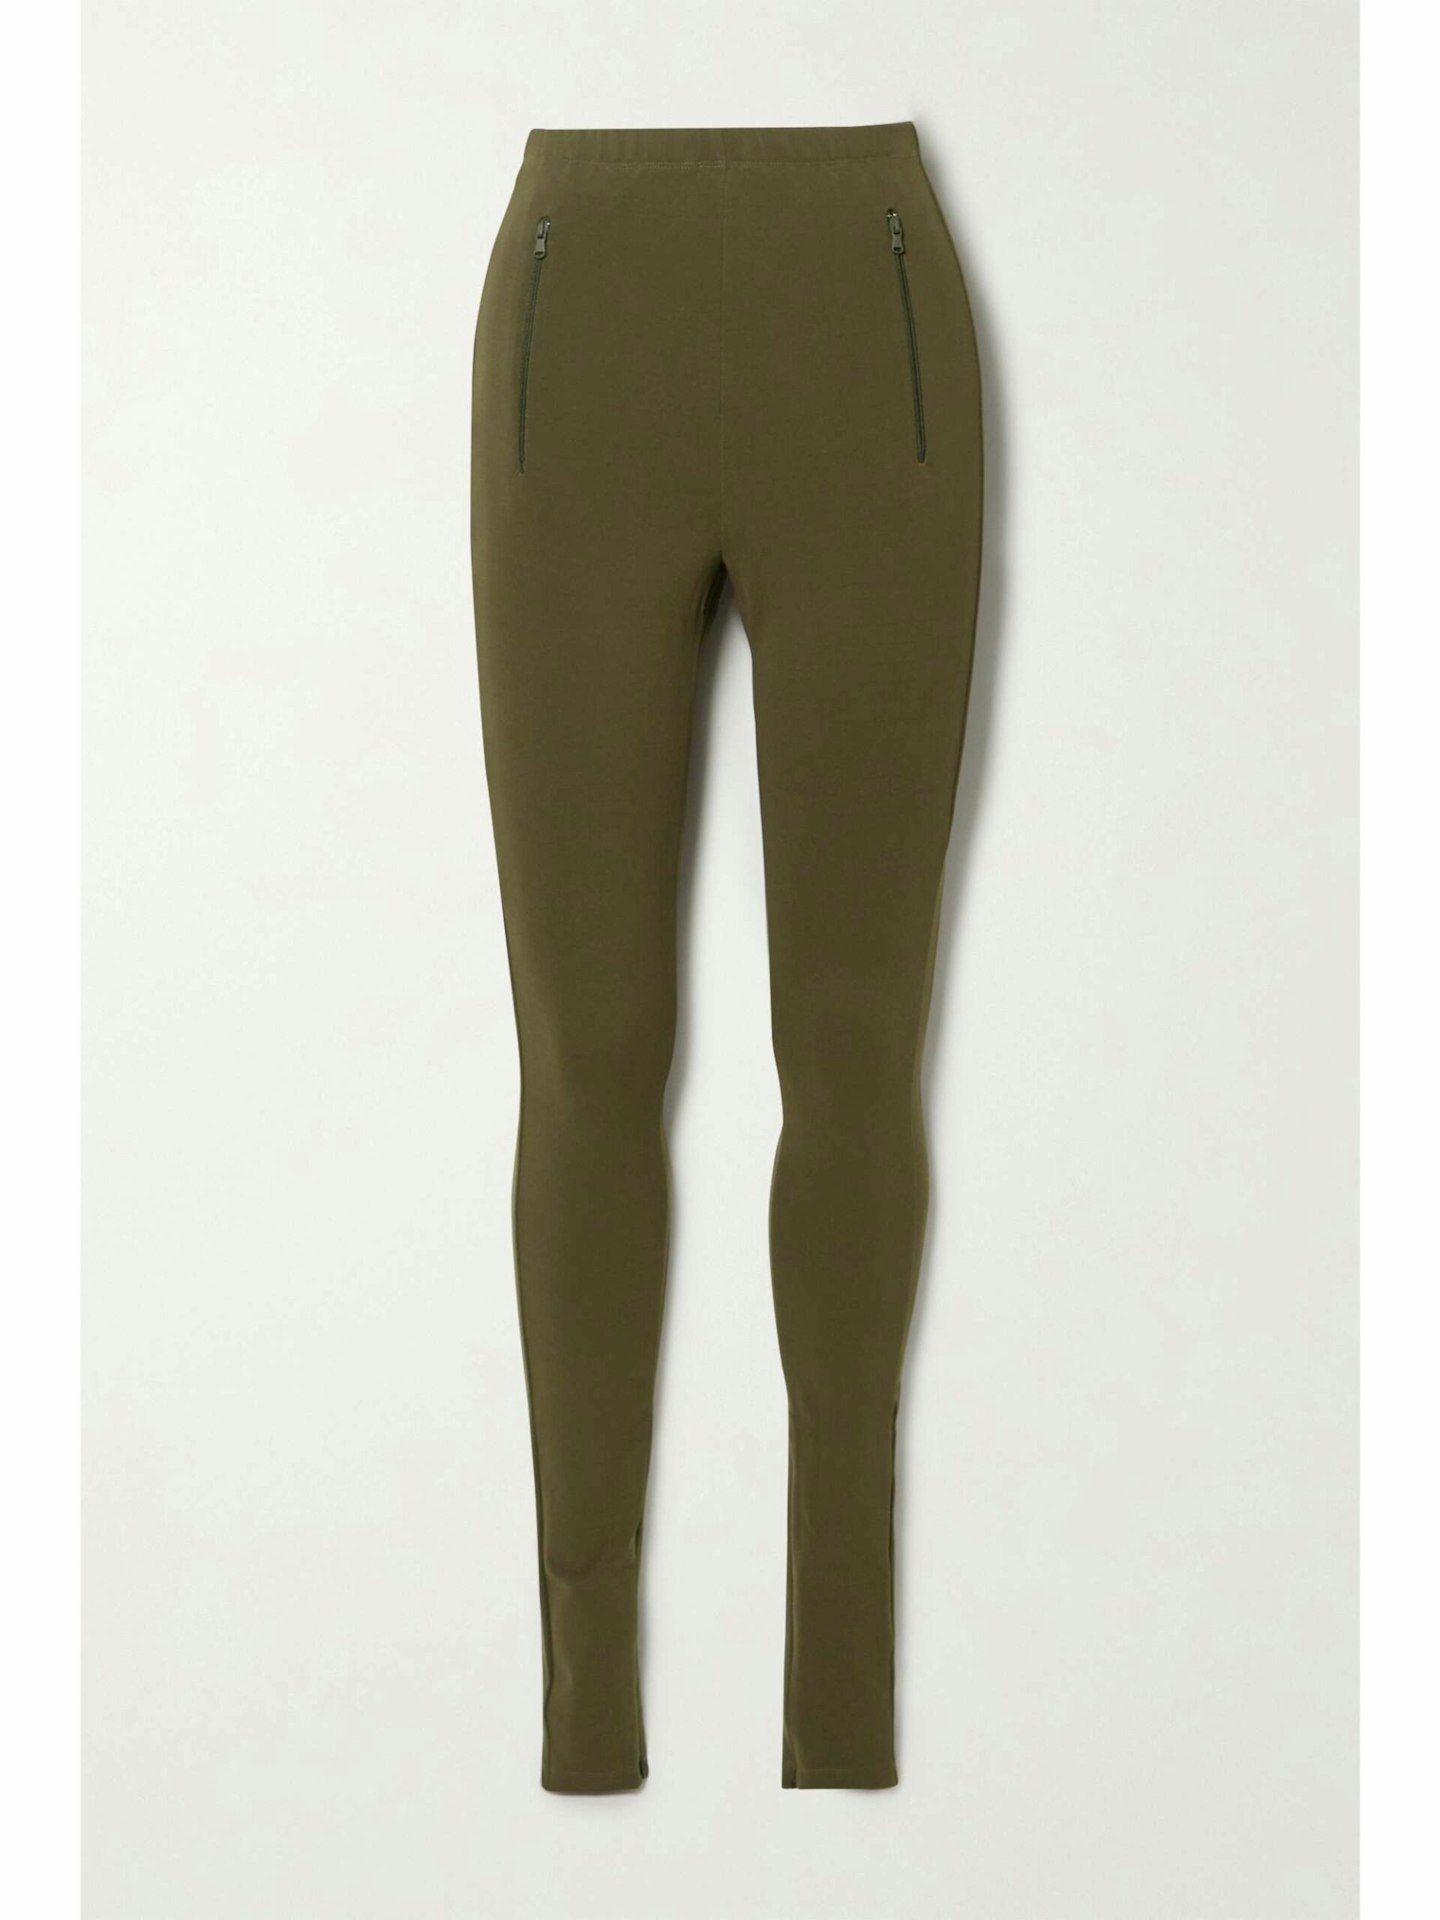 Wardrobe.nyc Leggings & Pants for Women